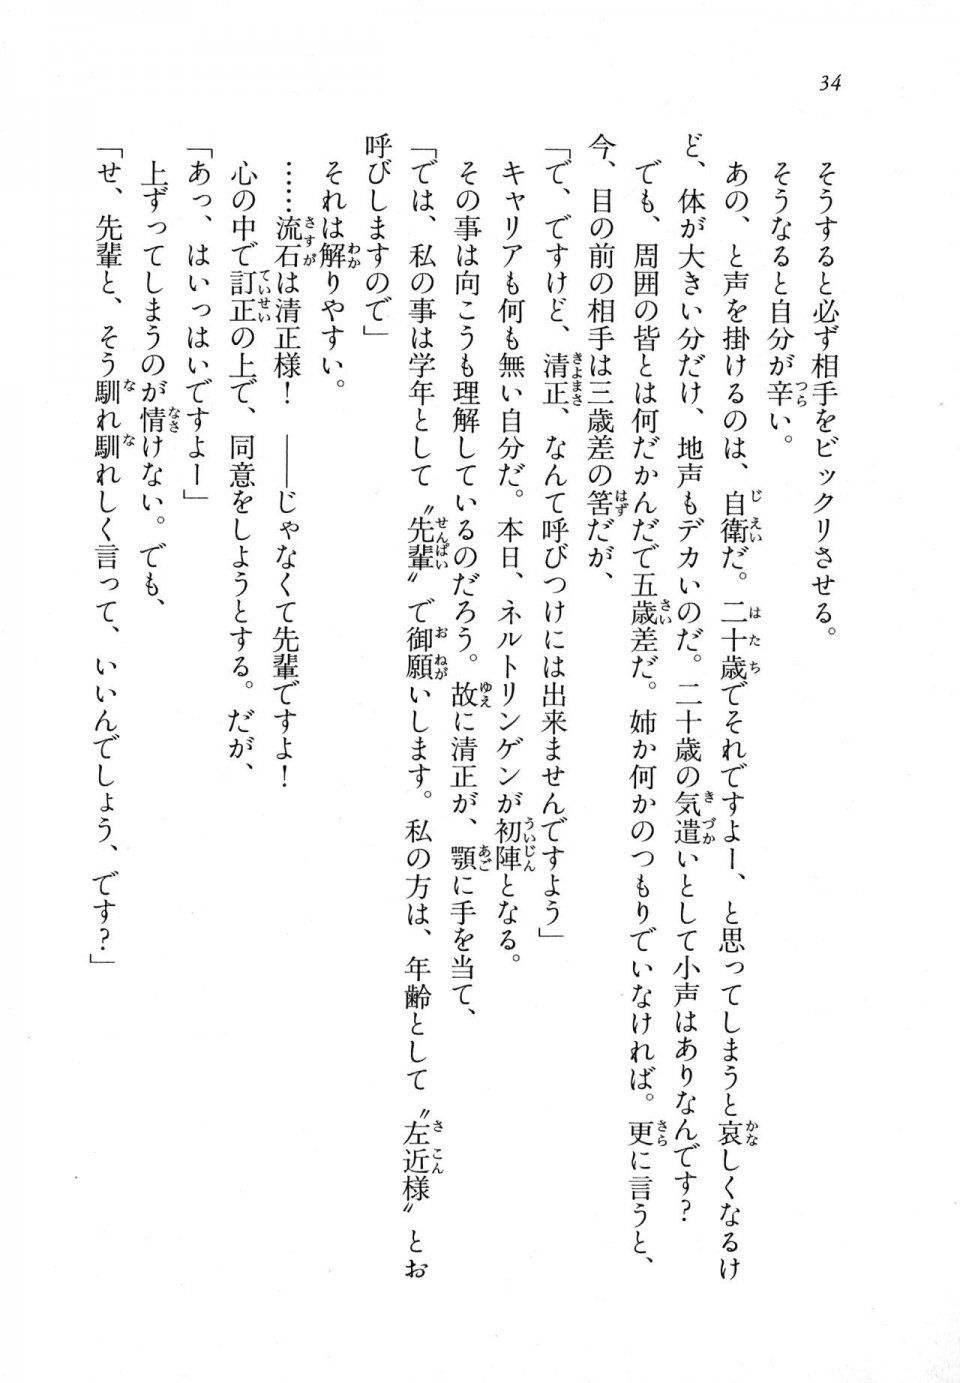 Kyoukai Senjou no Horizon LN Vol 18(7C) Part 1 - Photo #34